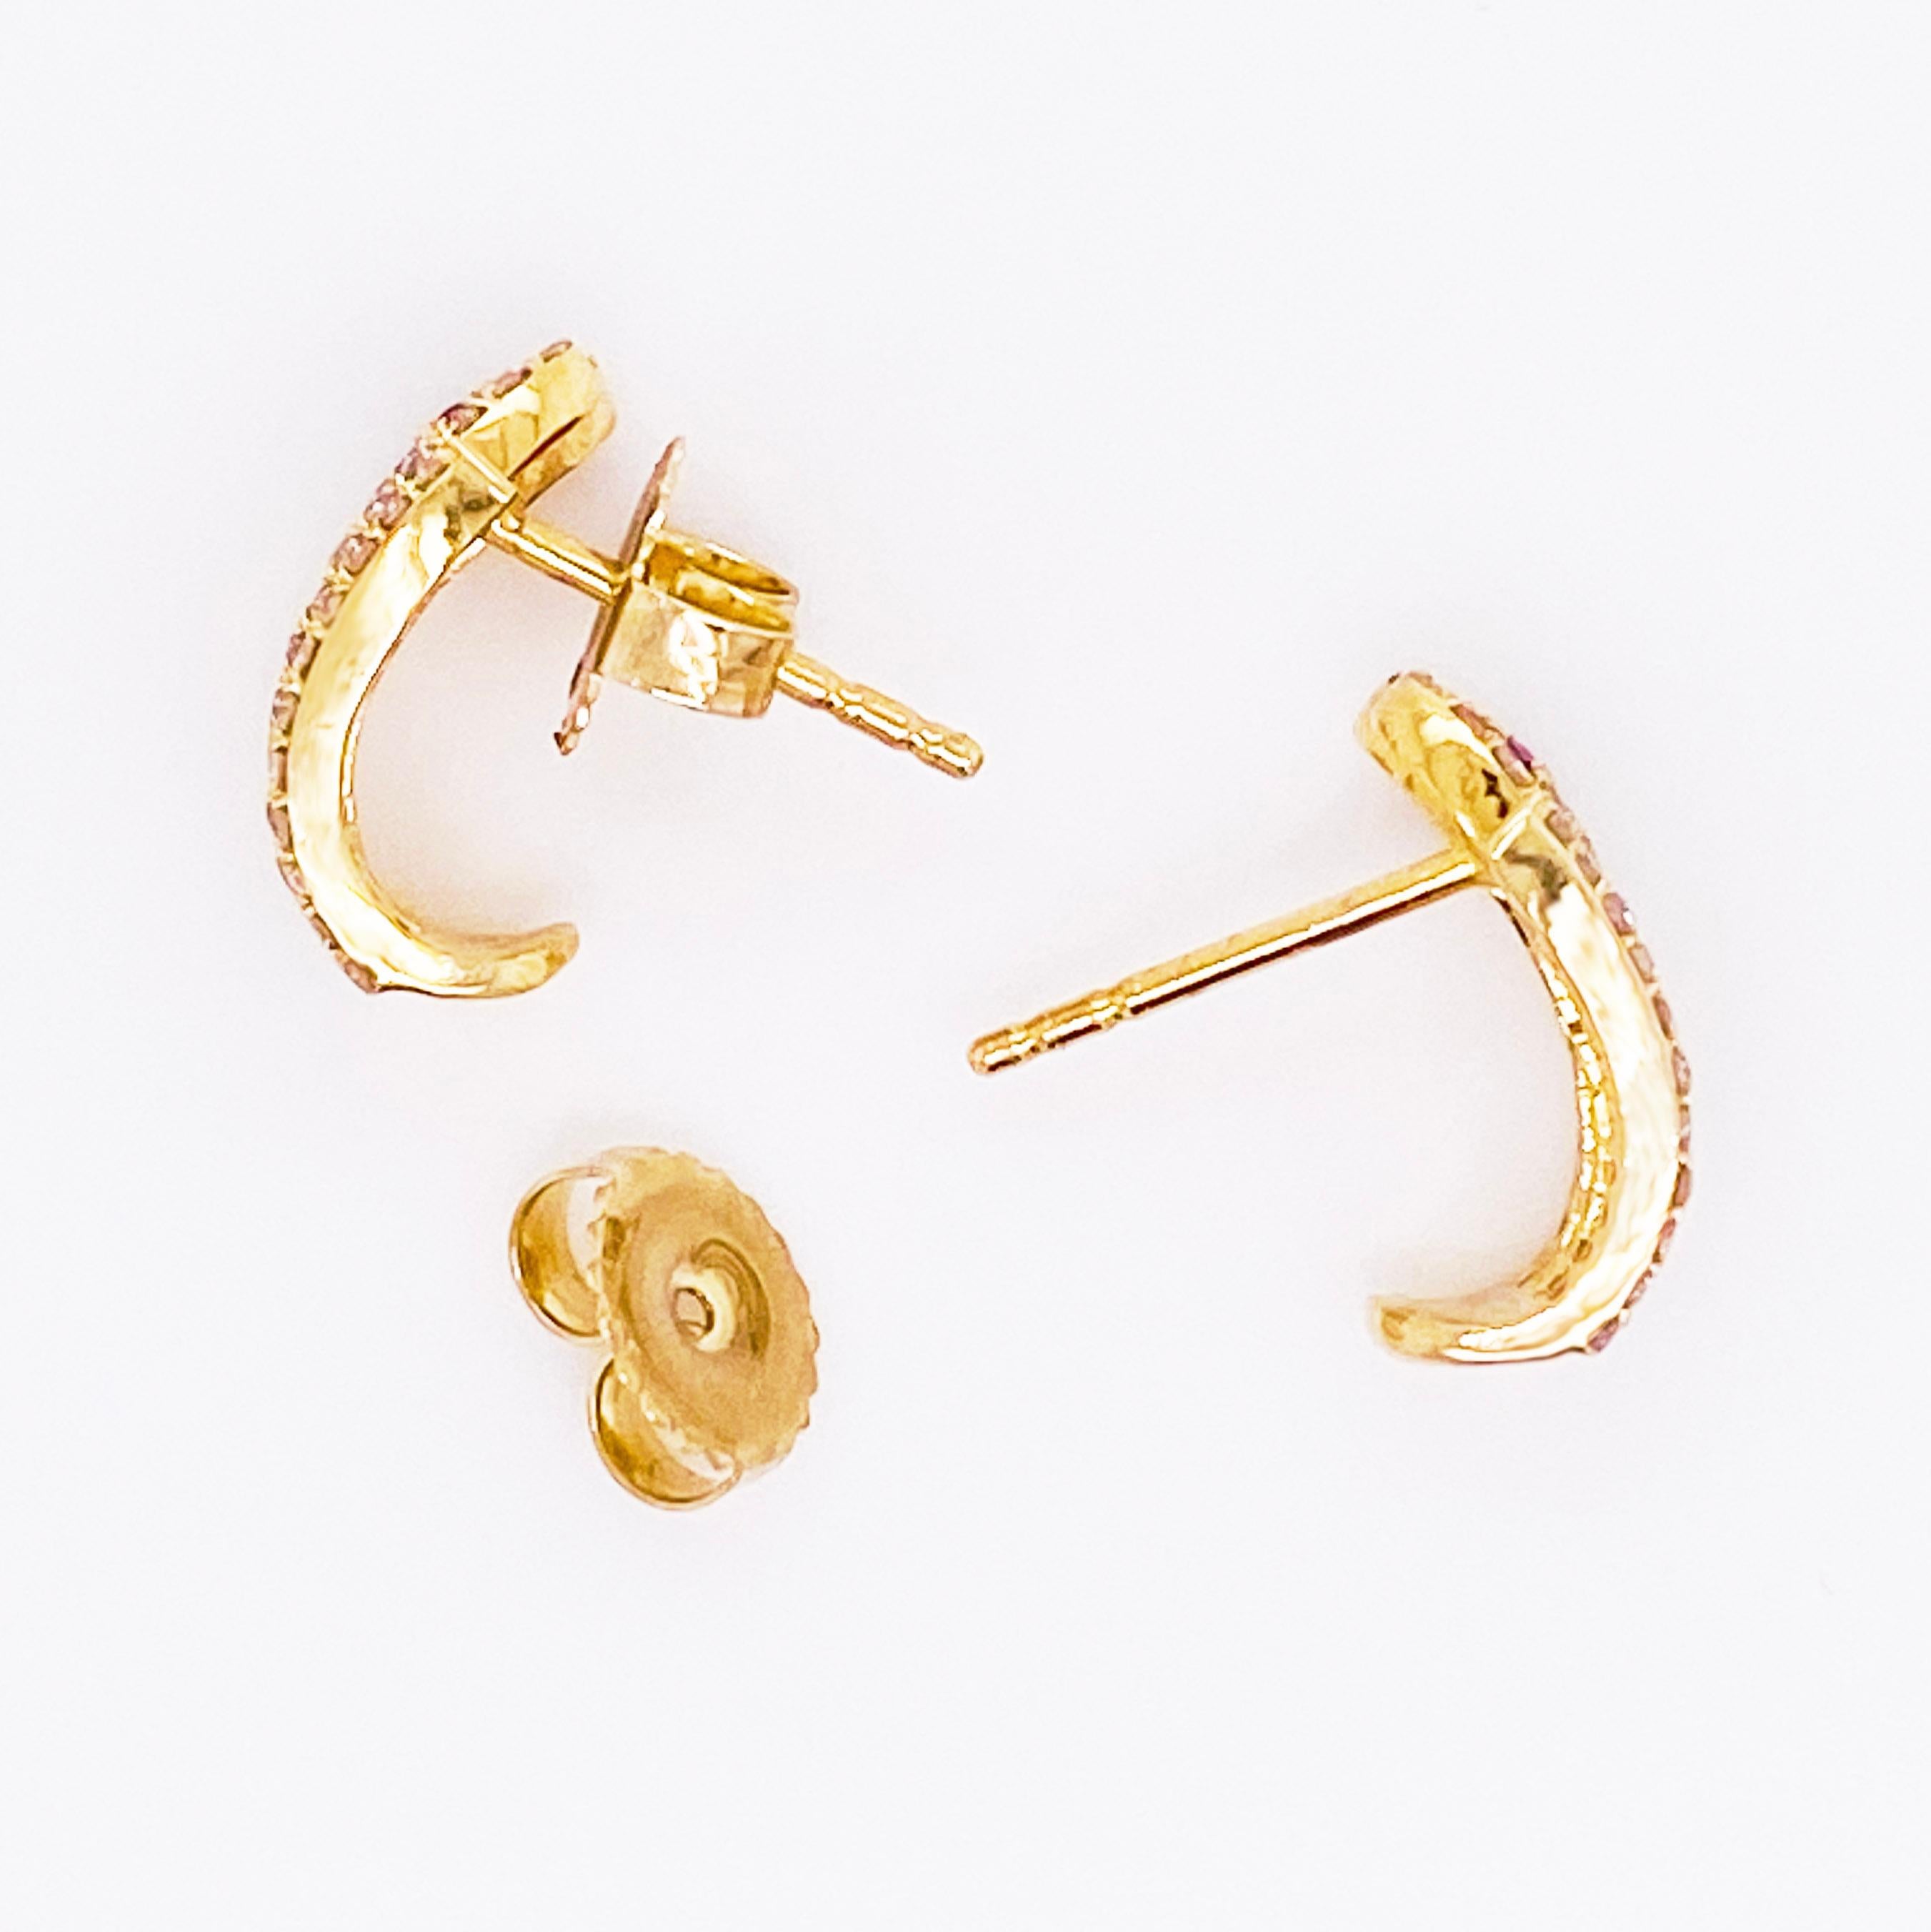 Modern Diamond Snake Earrings, Pave Diamond Ruby Serpent Earring Studs, 14 Karat Gold